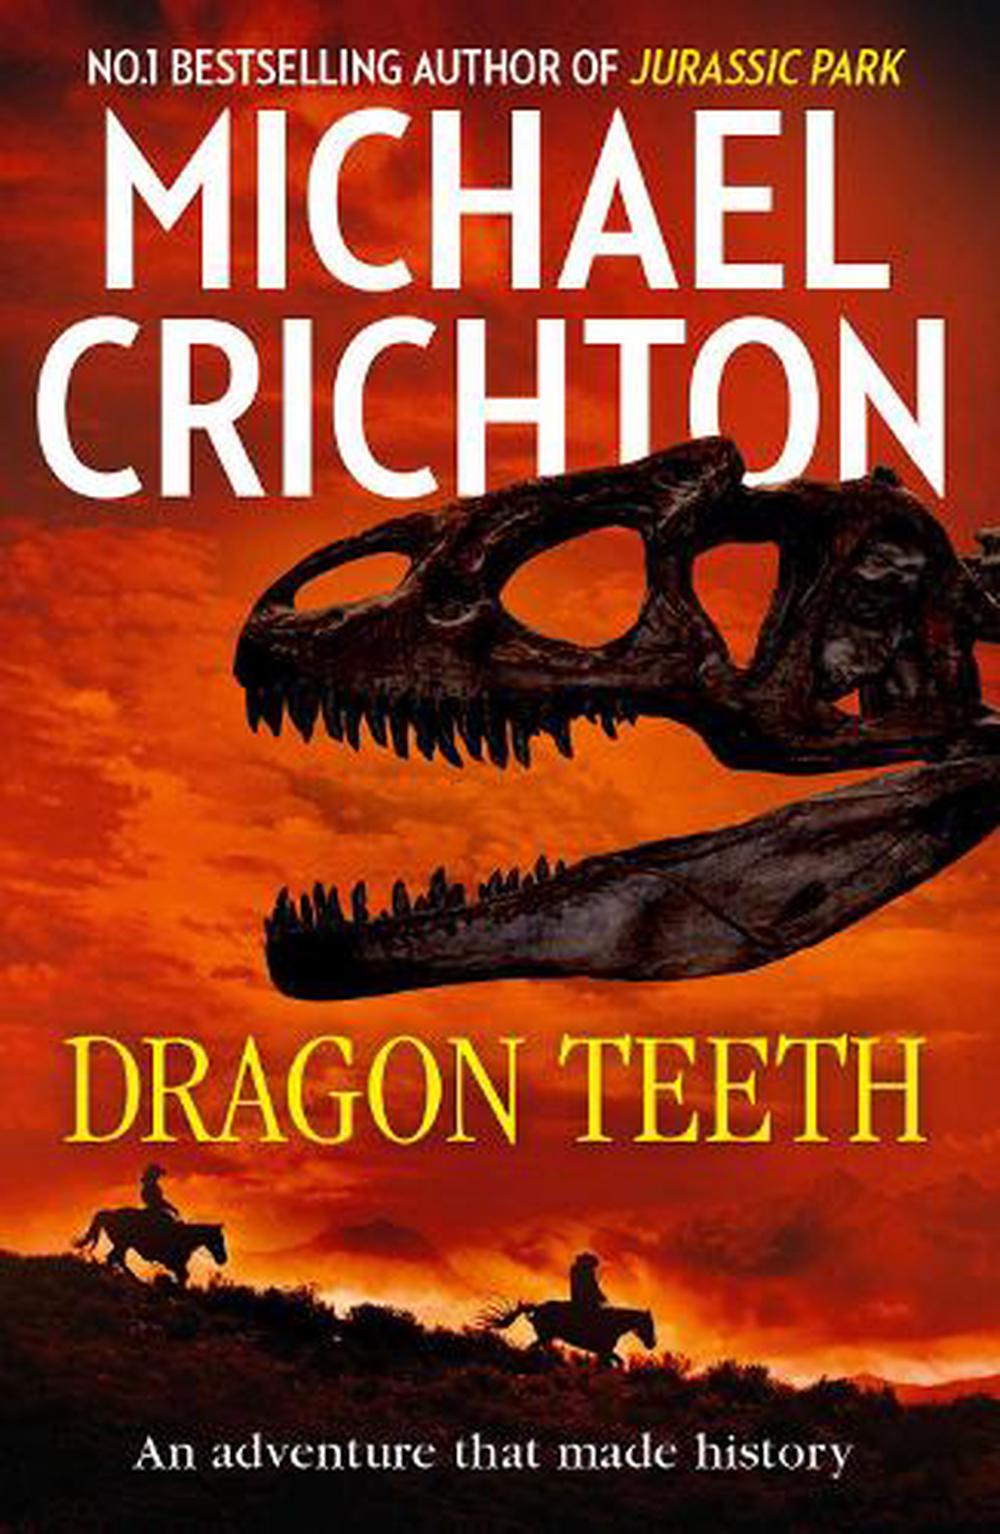 Dragon Teeth by Michael Crichton, Paperback, 9780008173098 | Buy online ...